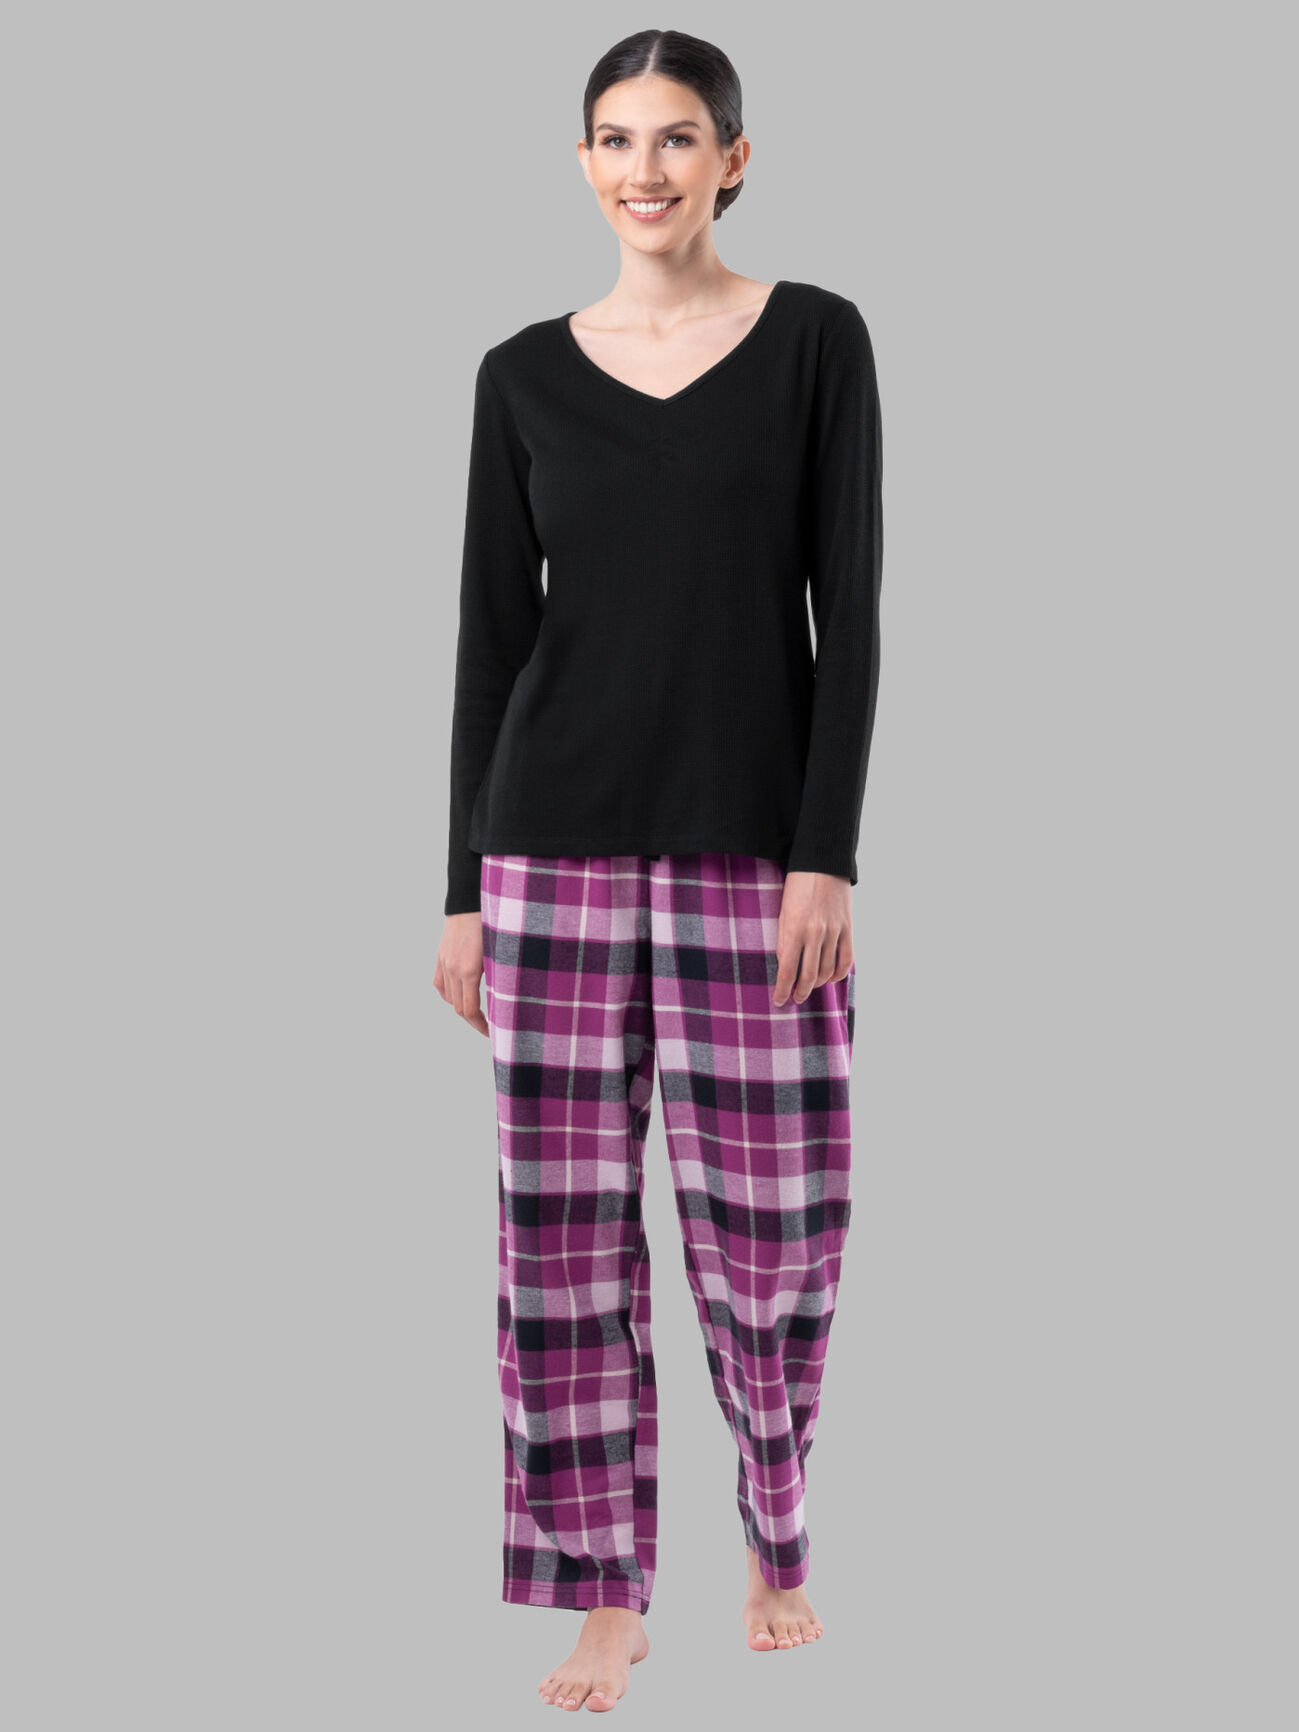 So Berry Cute Shorts Pajamas - sleepover pjs, girls shorts set